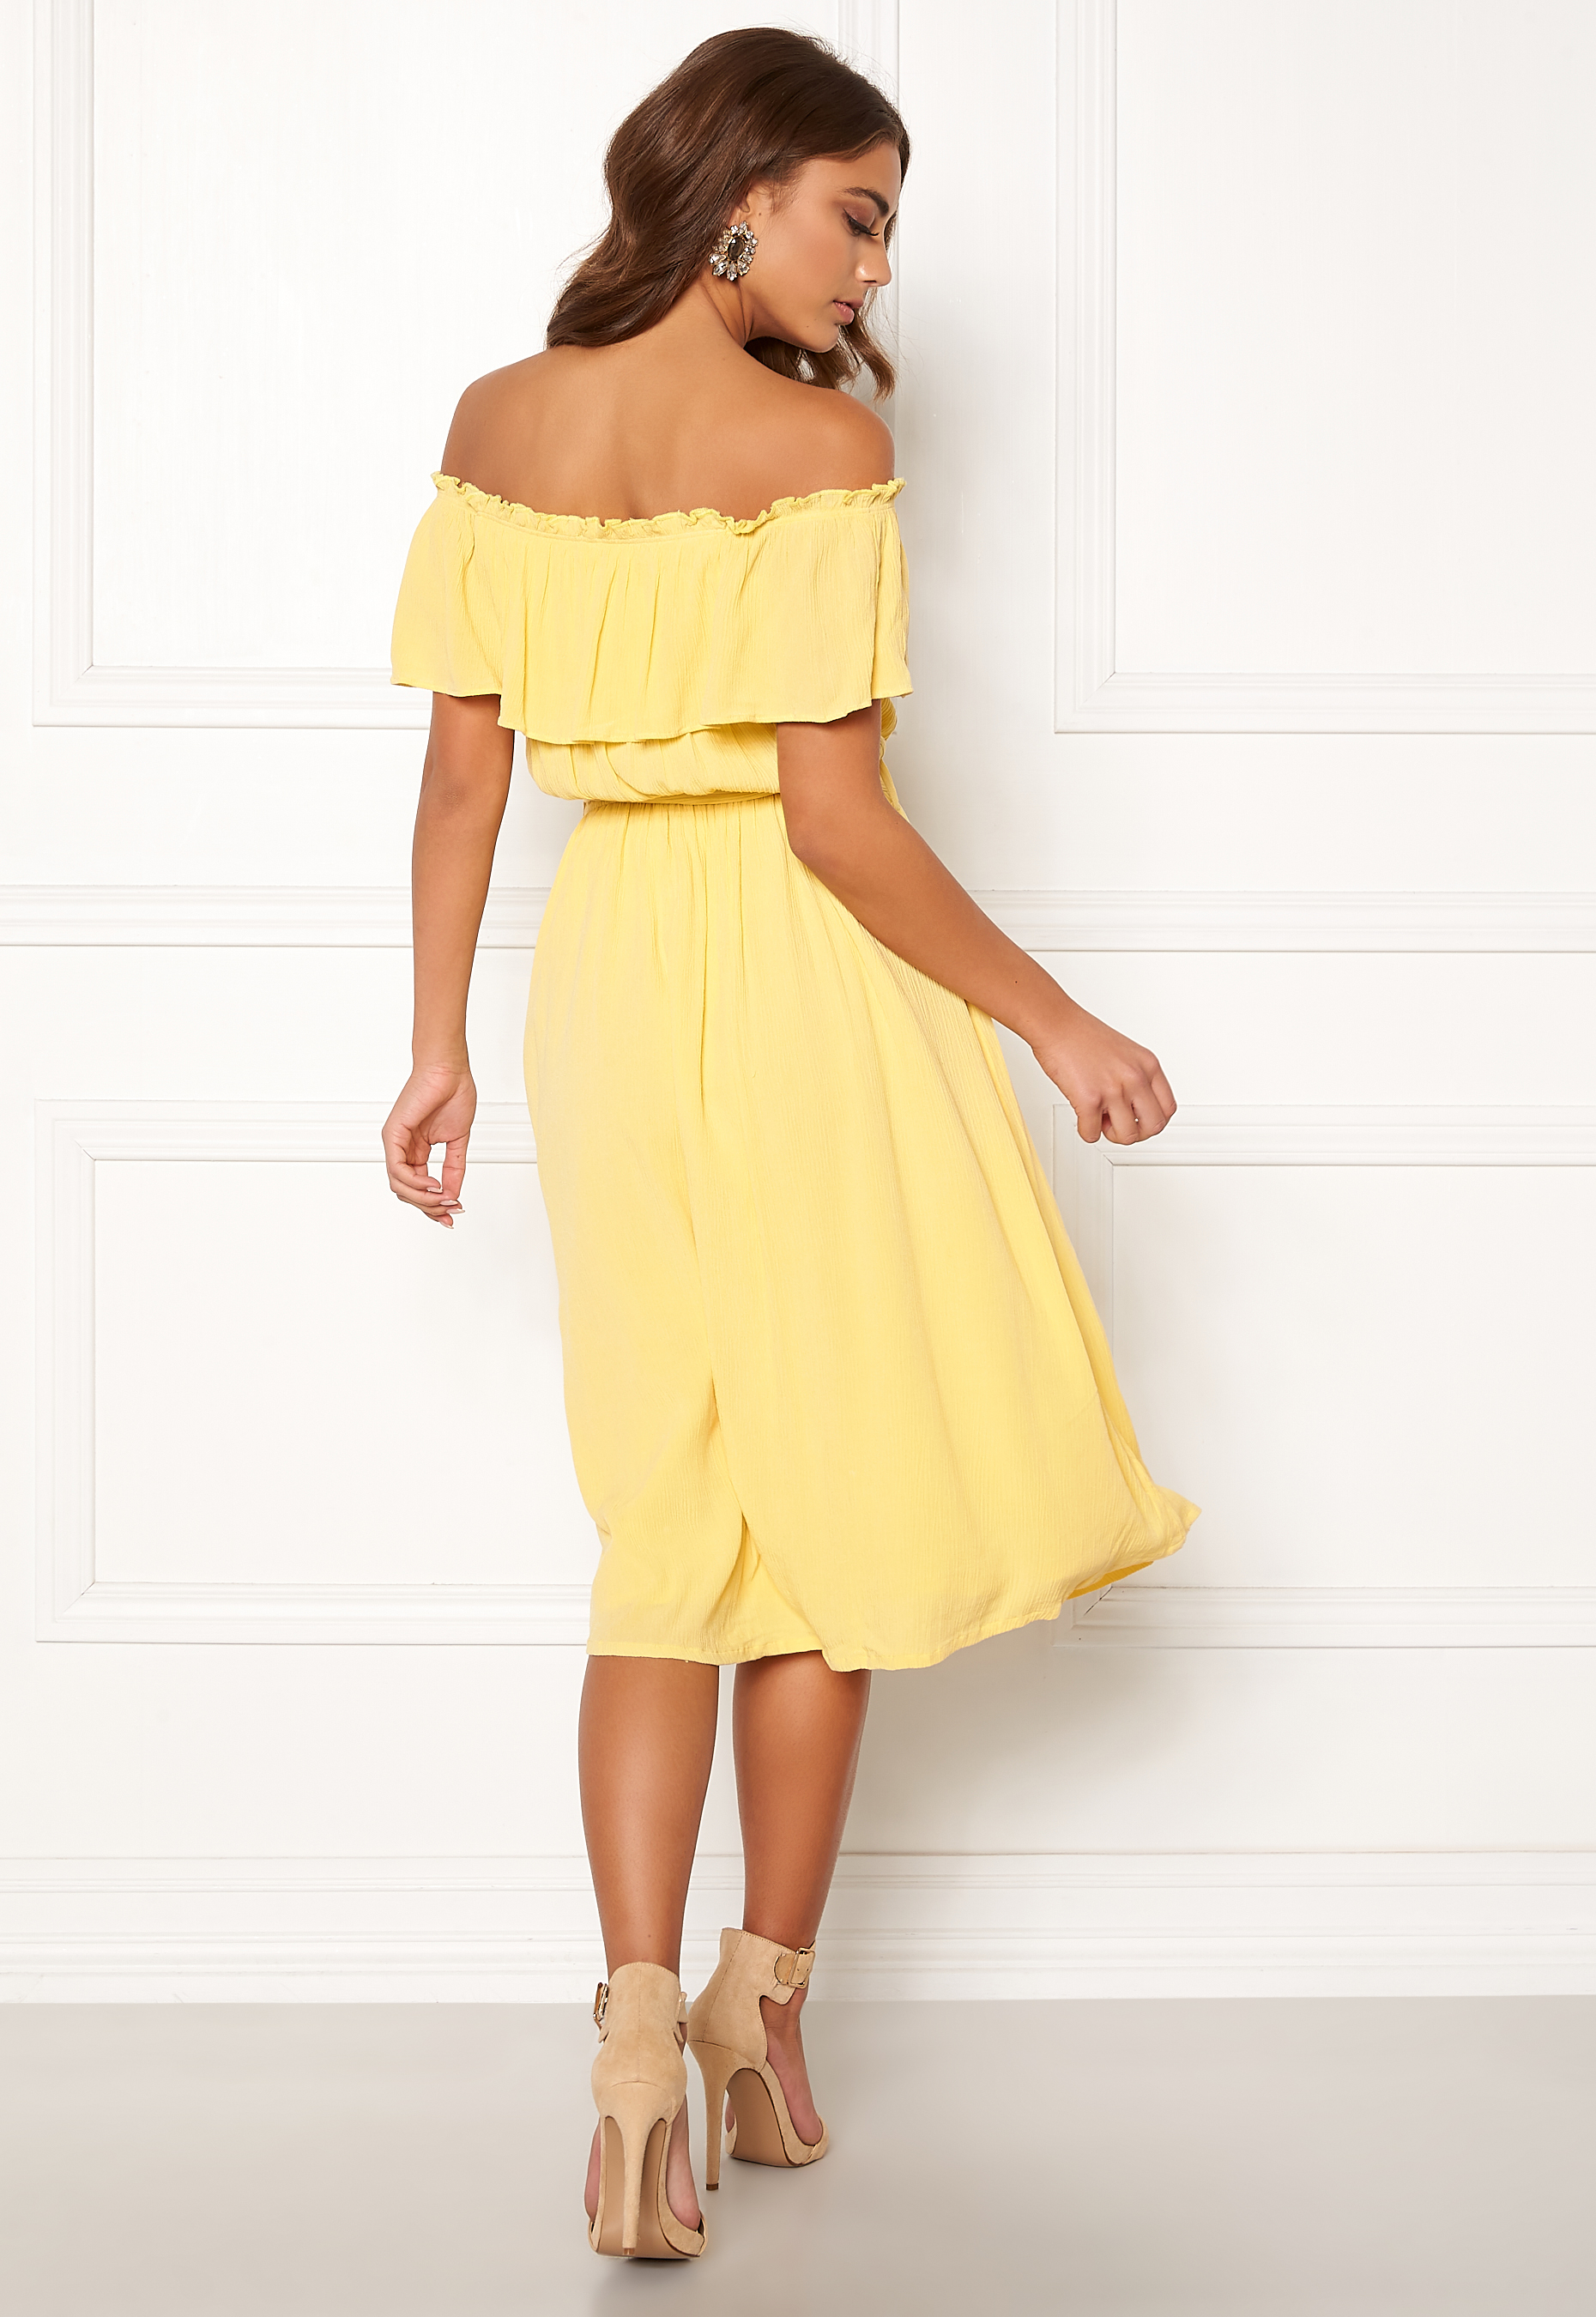 light yellow off the shoulder dress